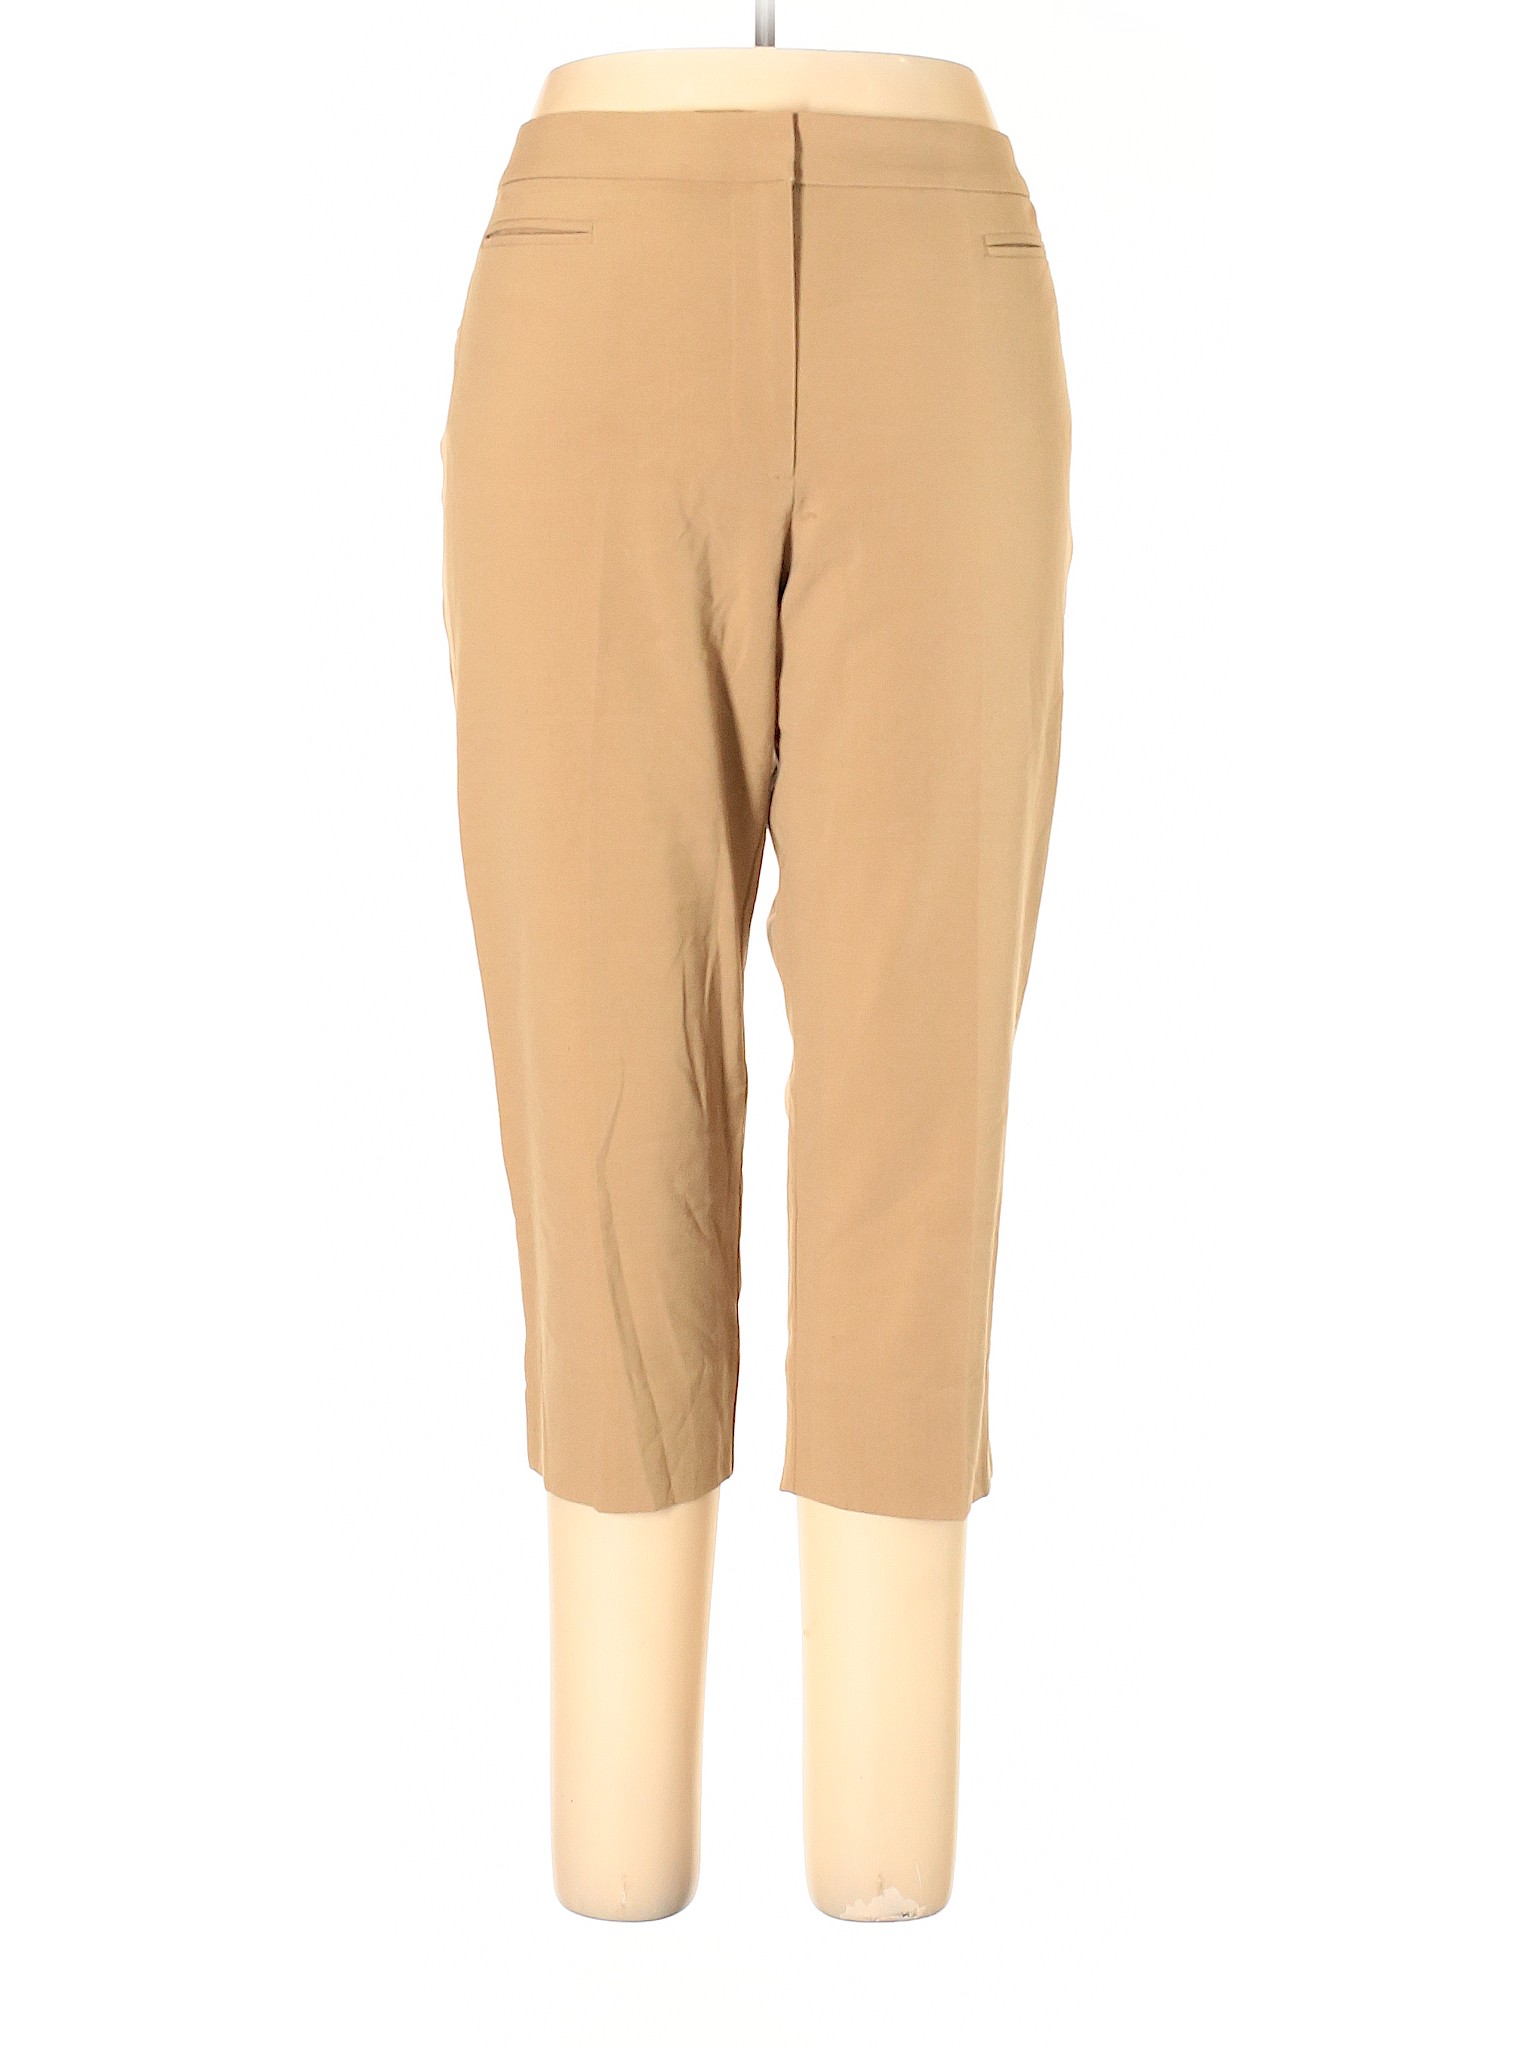 Talbots Women Brown Dress Pants 16 Petites | eBay